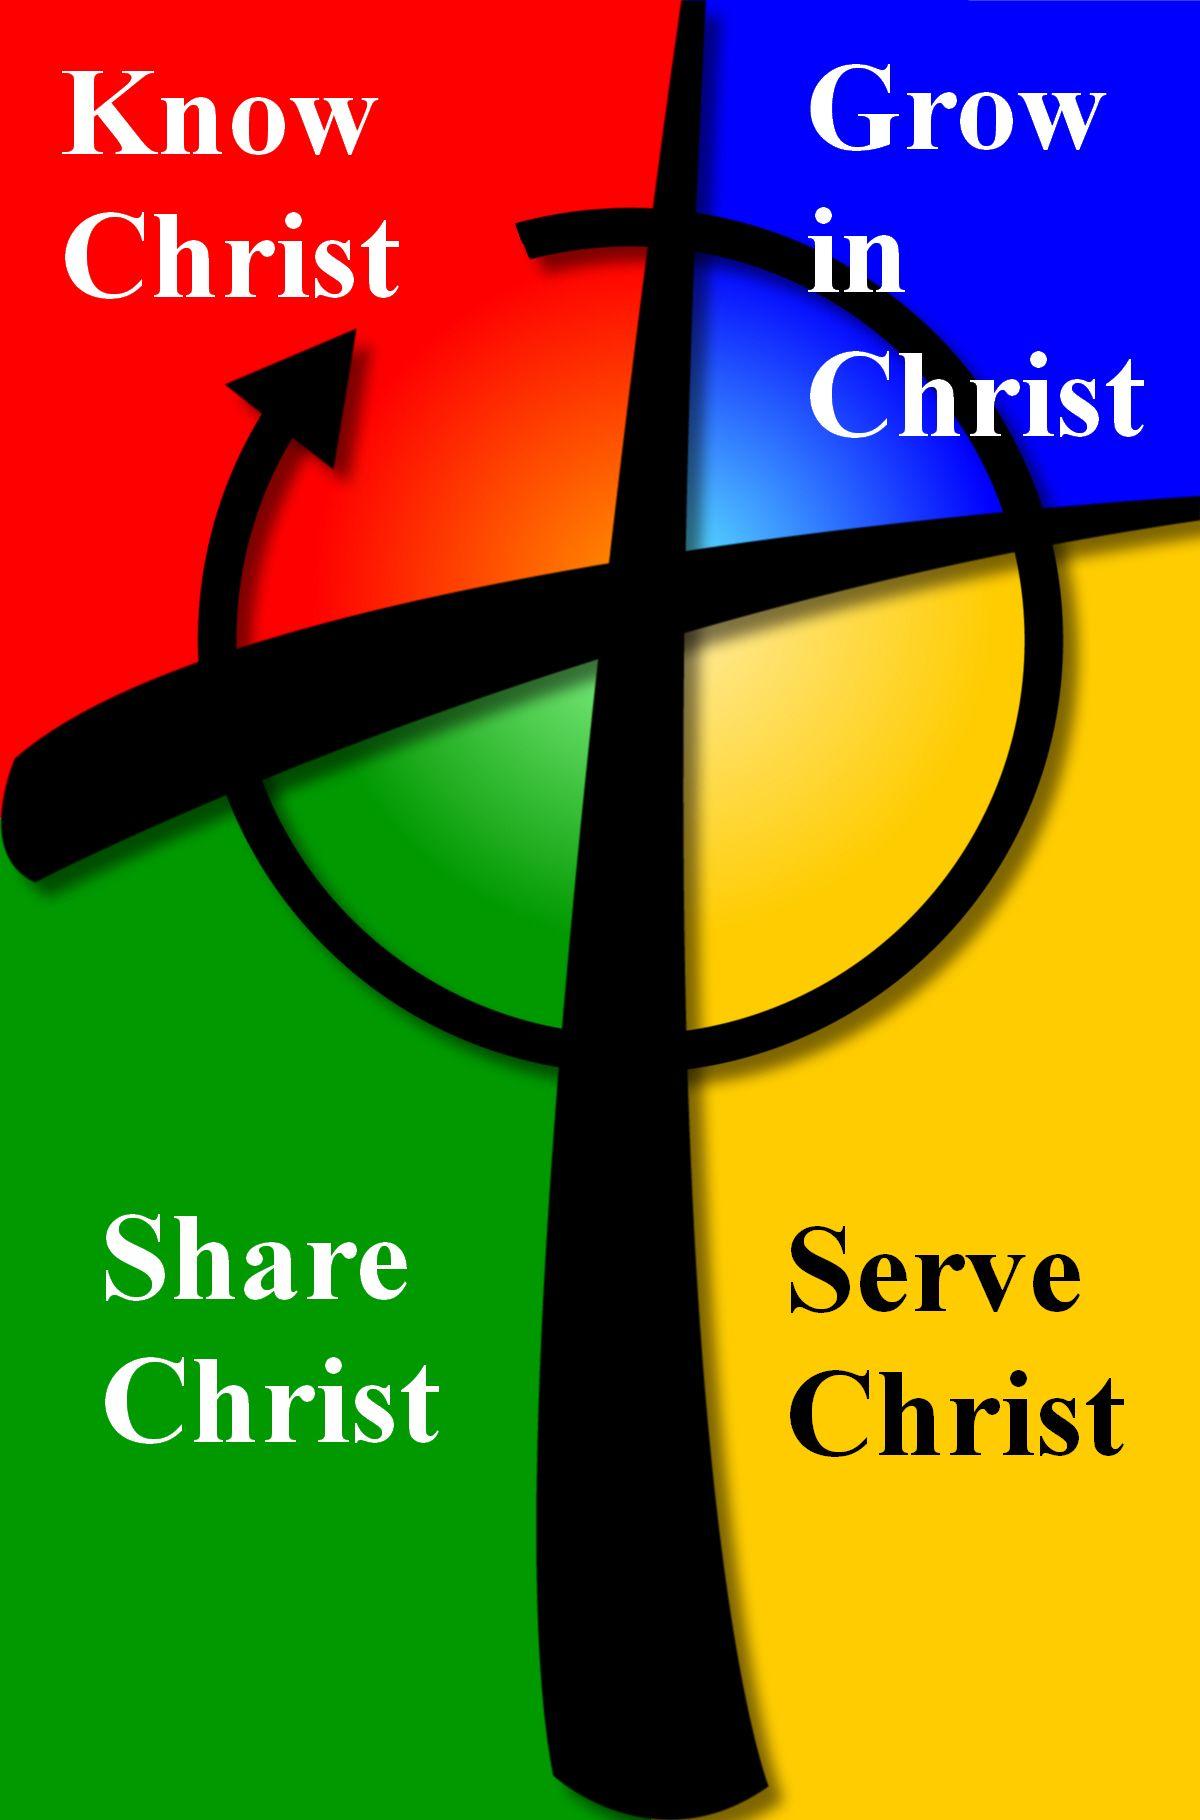 Discipleship Logo - Simple Discipleship logo words | Sermon Series Idea